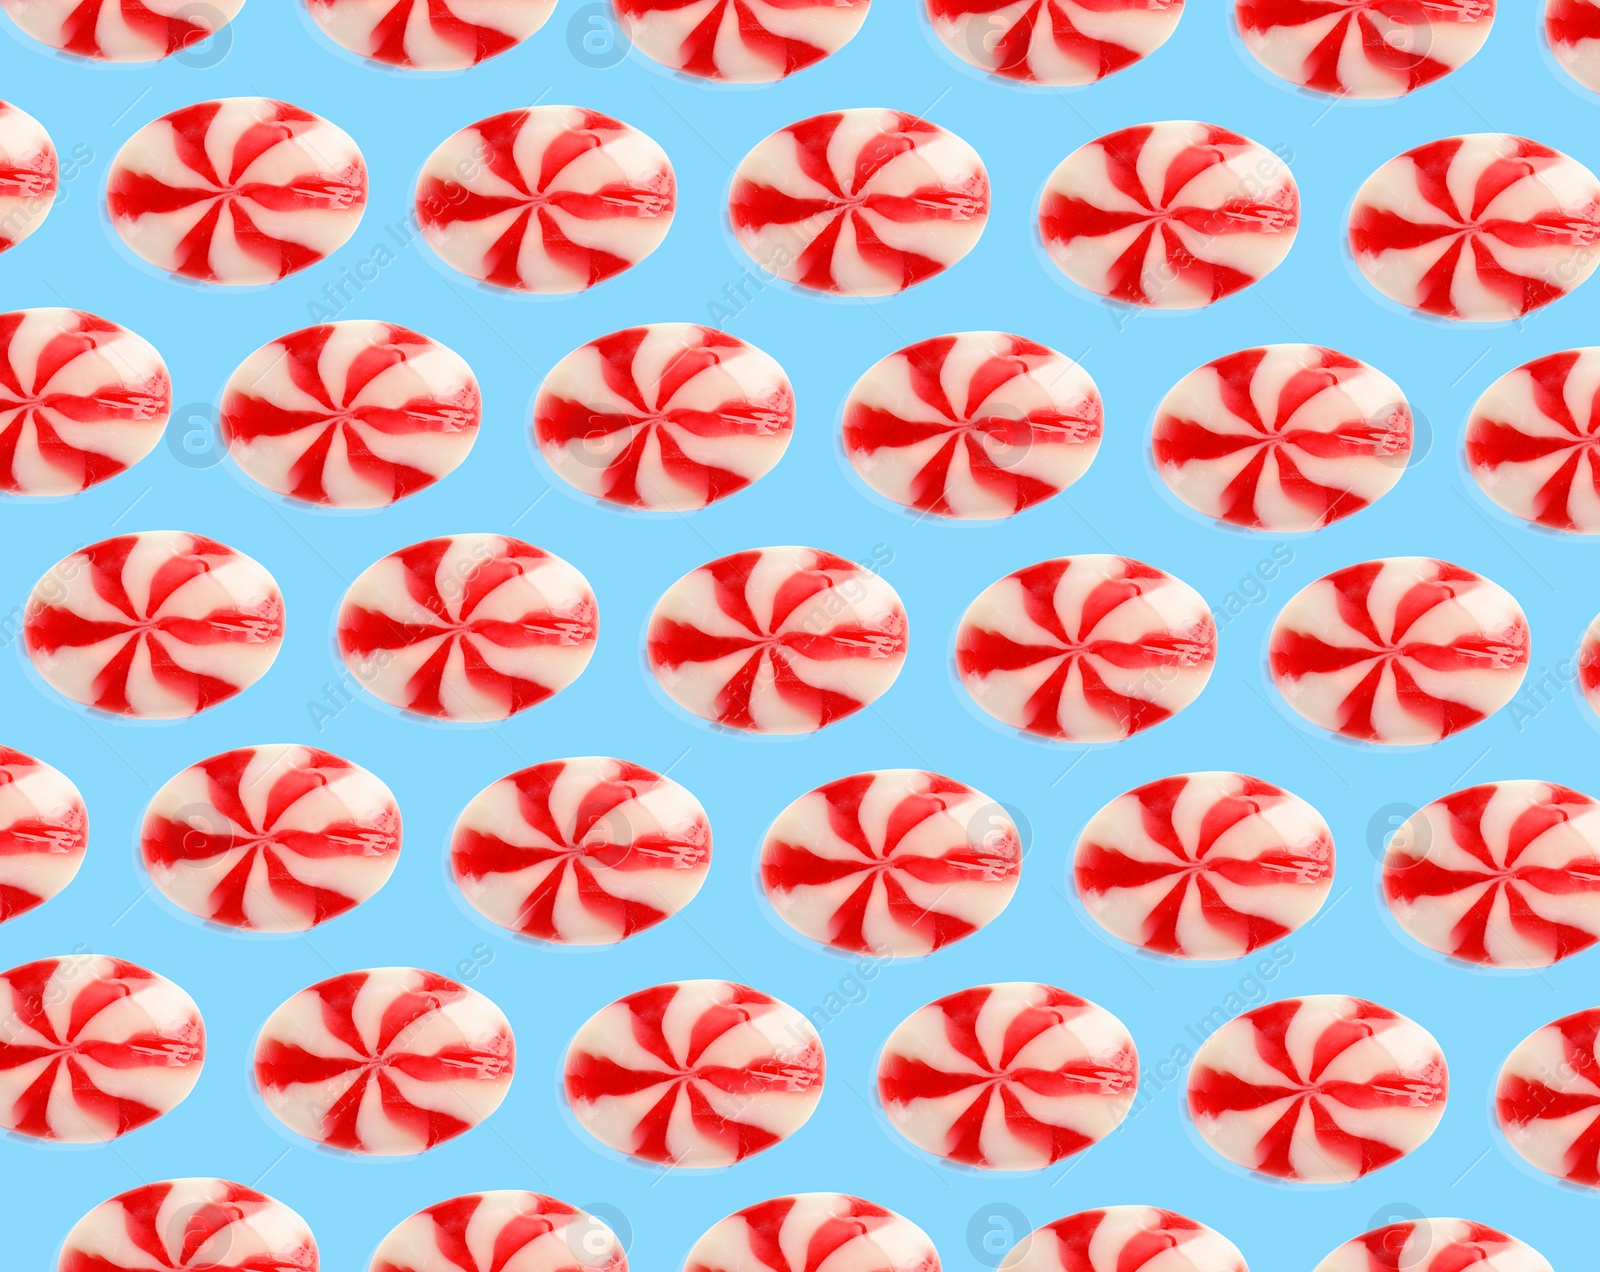 Image of Tasty candies on light blue background. Pattern design